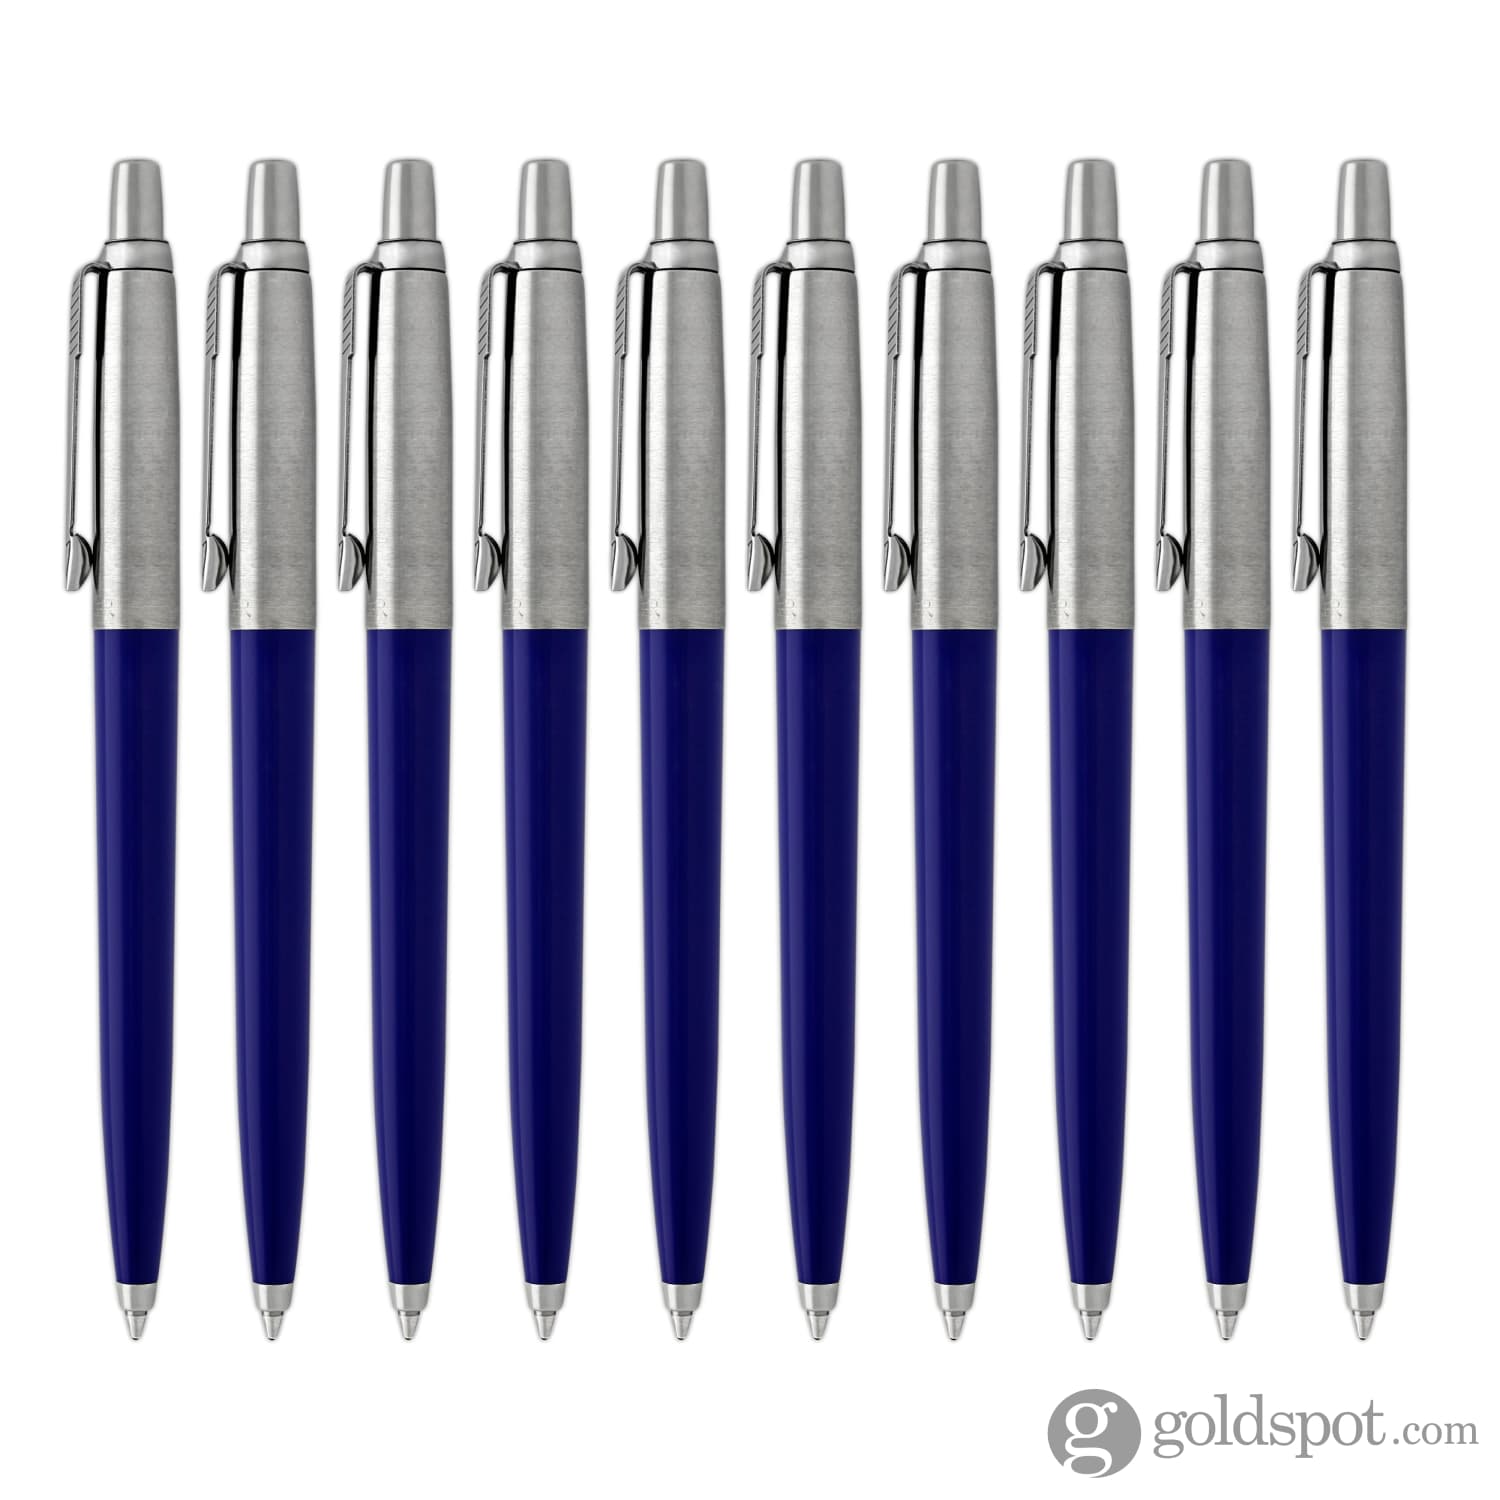 Parker Jotter Ballpoint Pen in Blue Barrel - Pack of 10